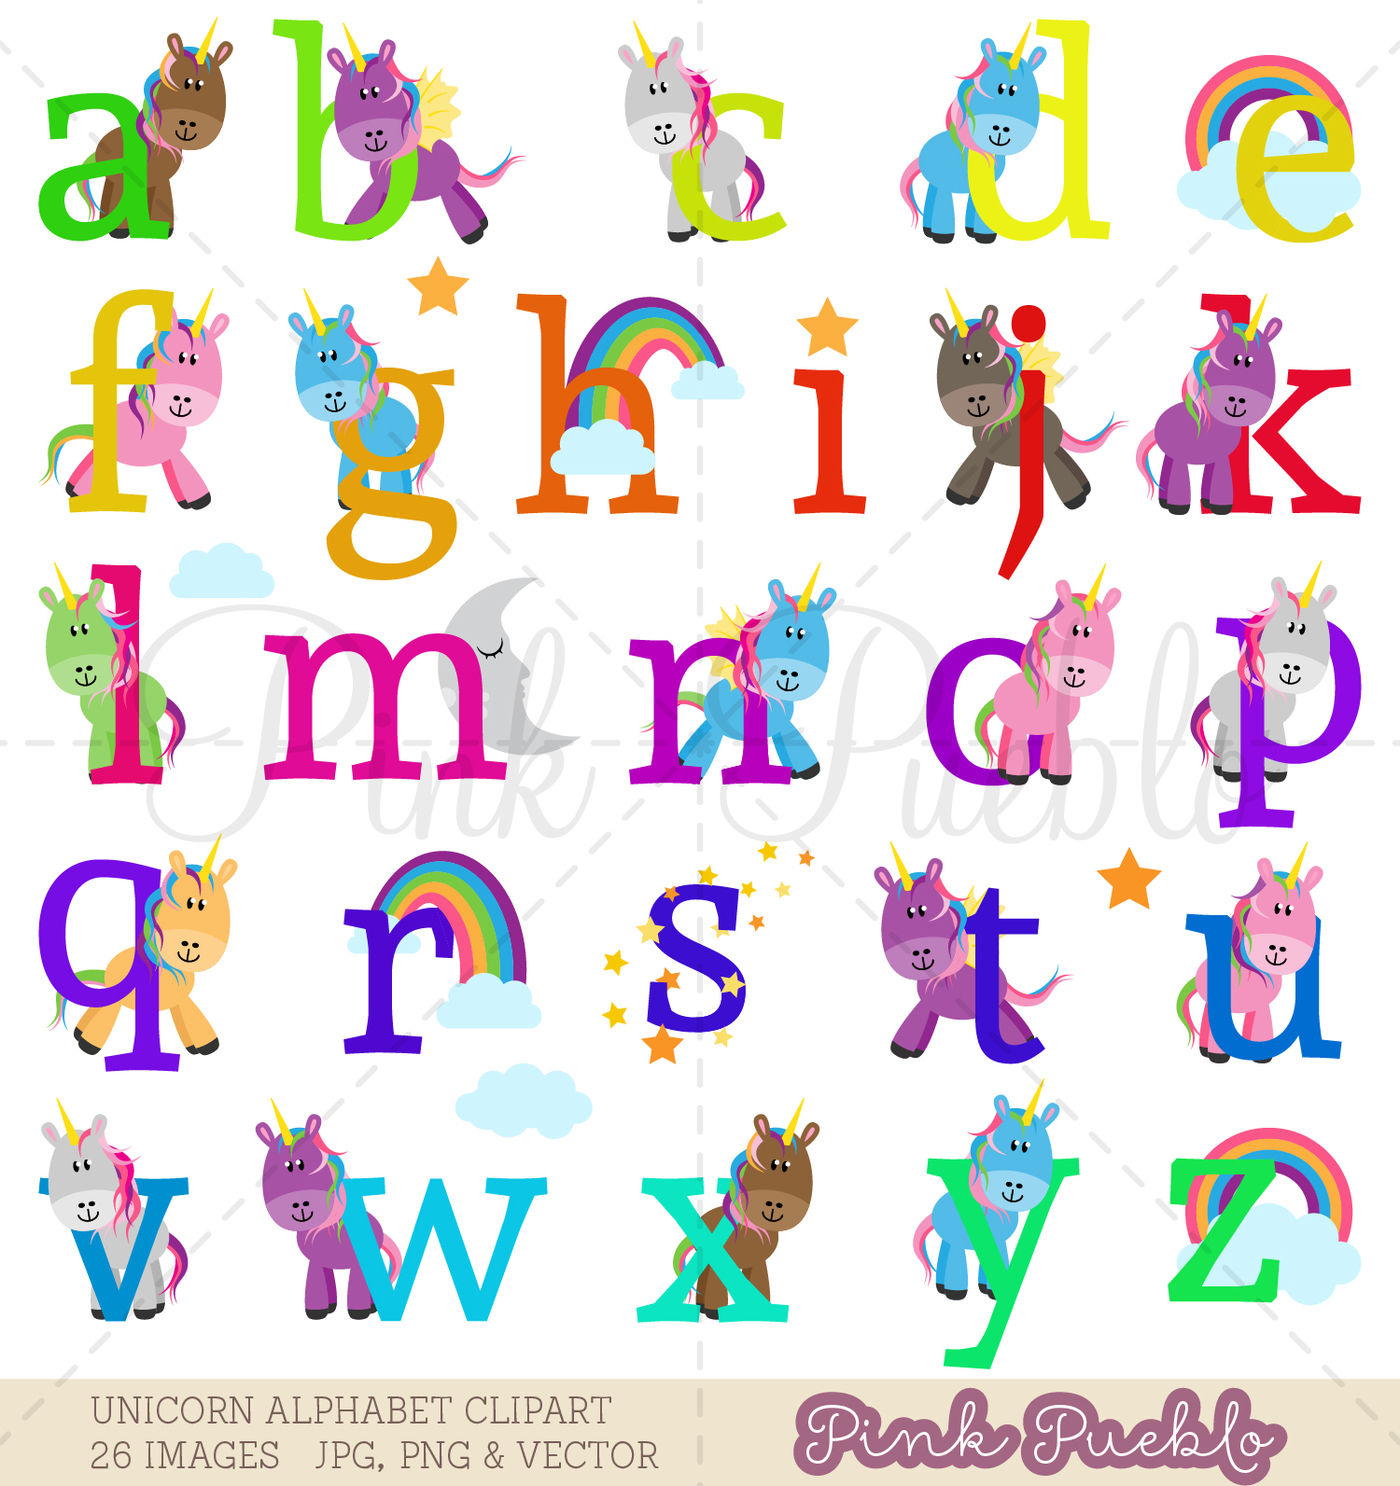 Unicorn Alphabet Clipart and Vectors By Devon Carlson | TheHungryJPEG.com